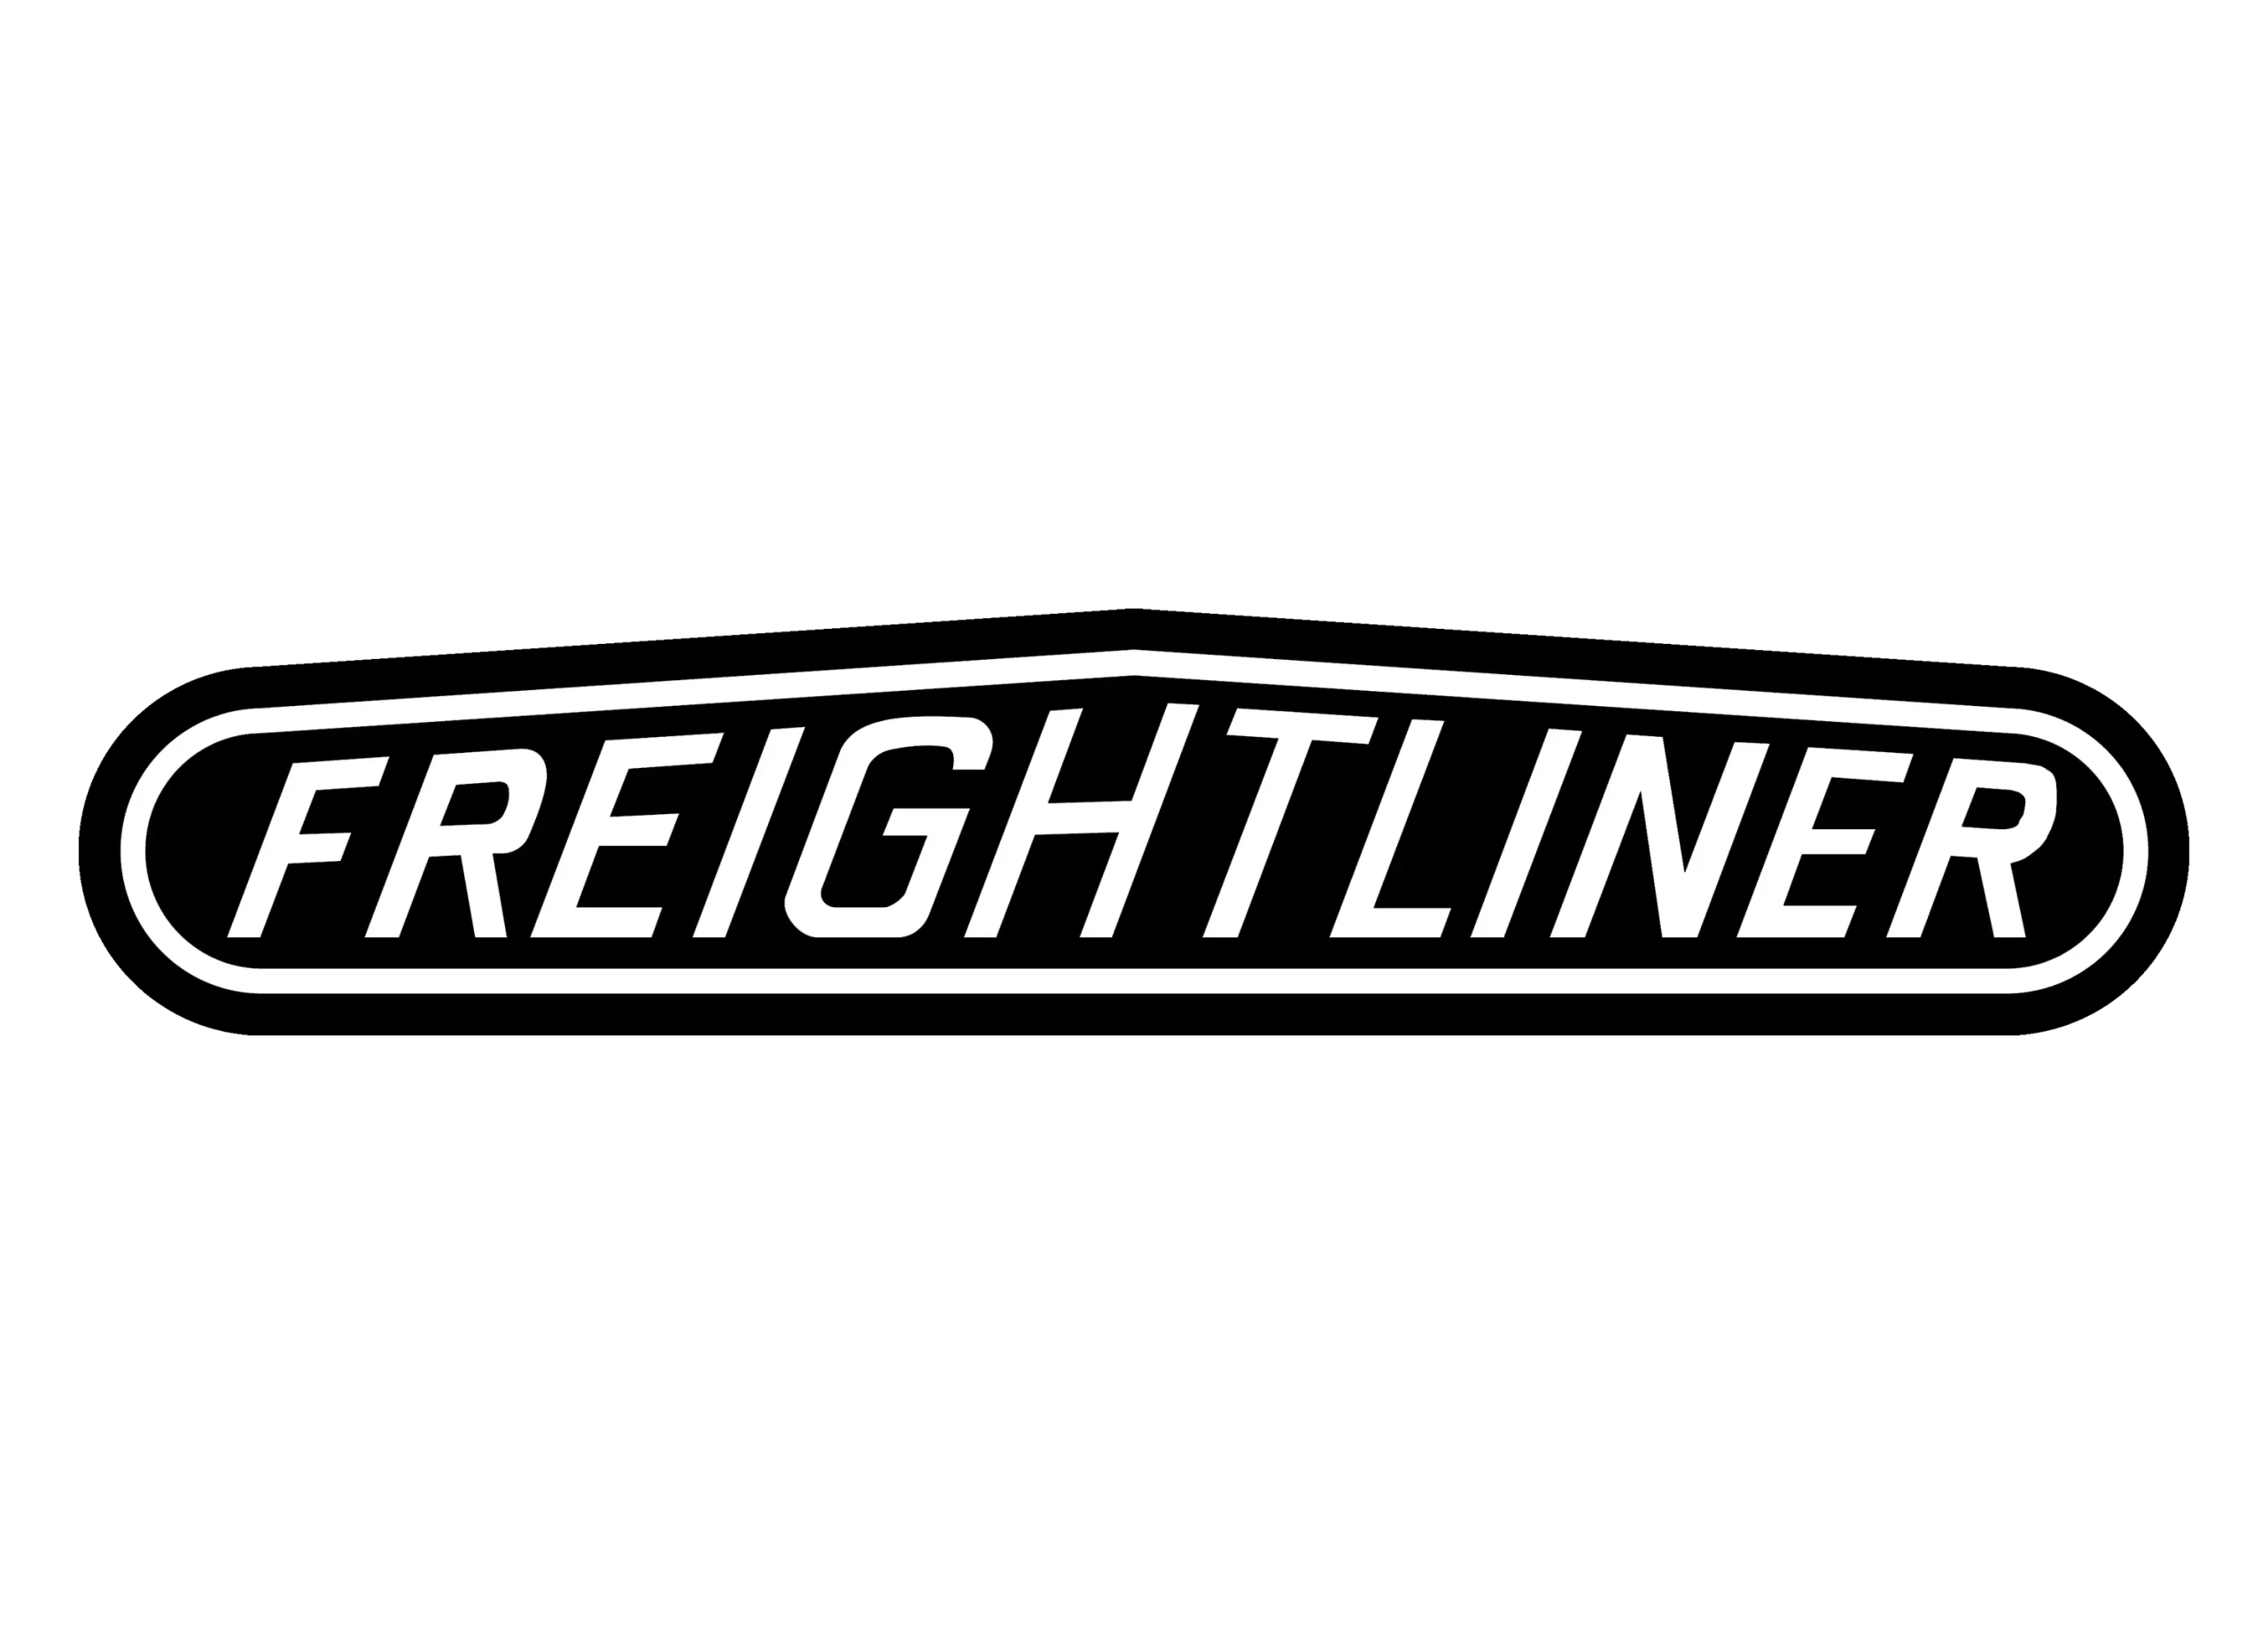 Freightliner logo 1942-1951